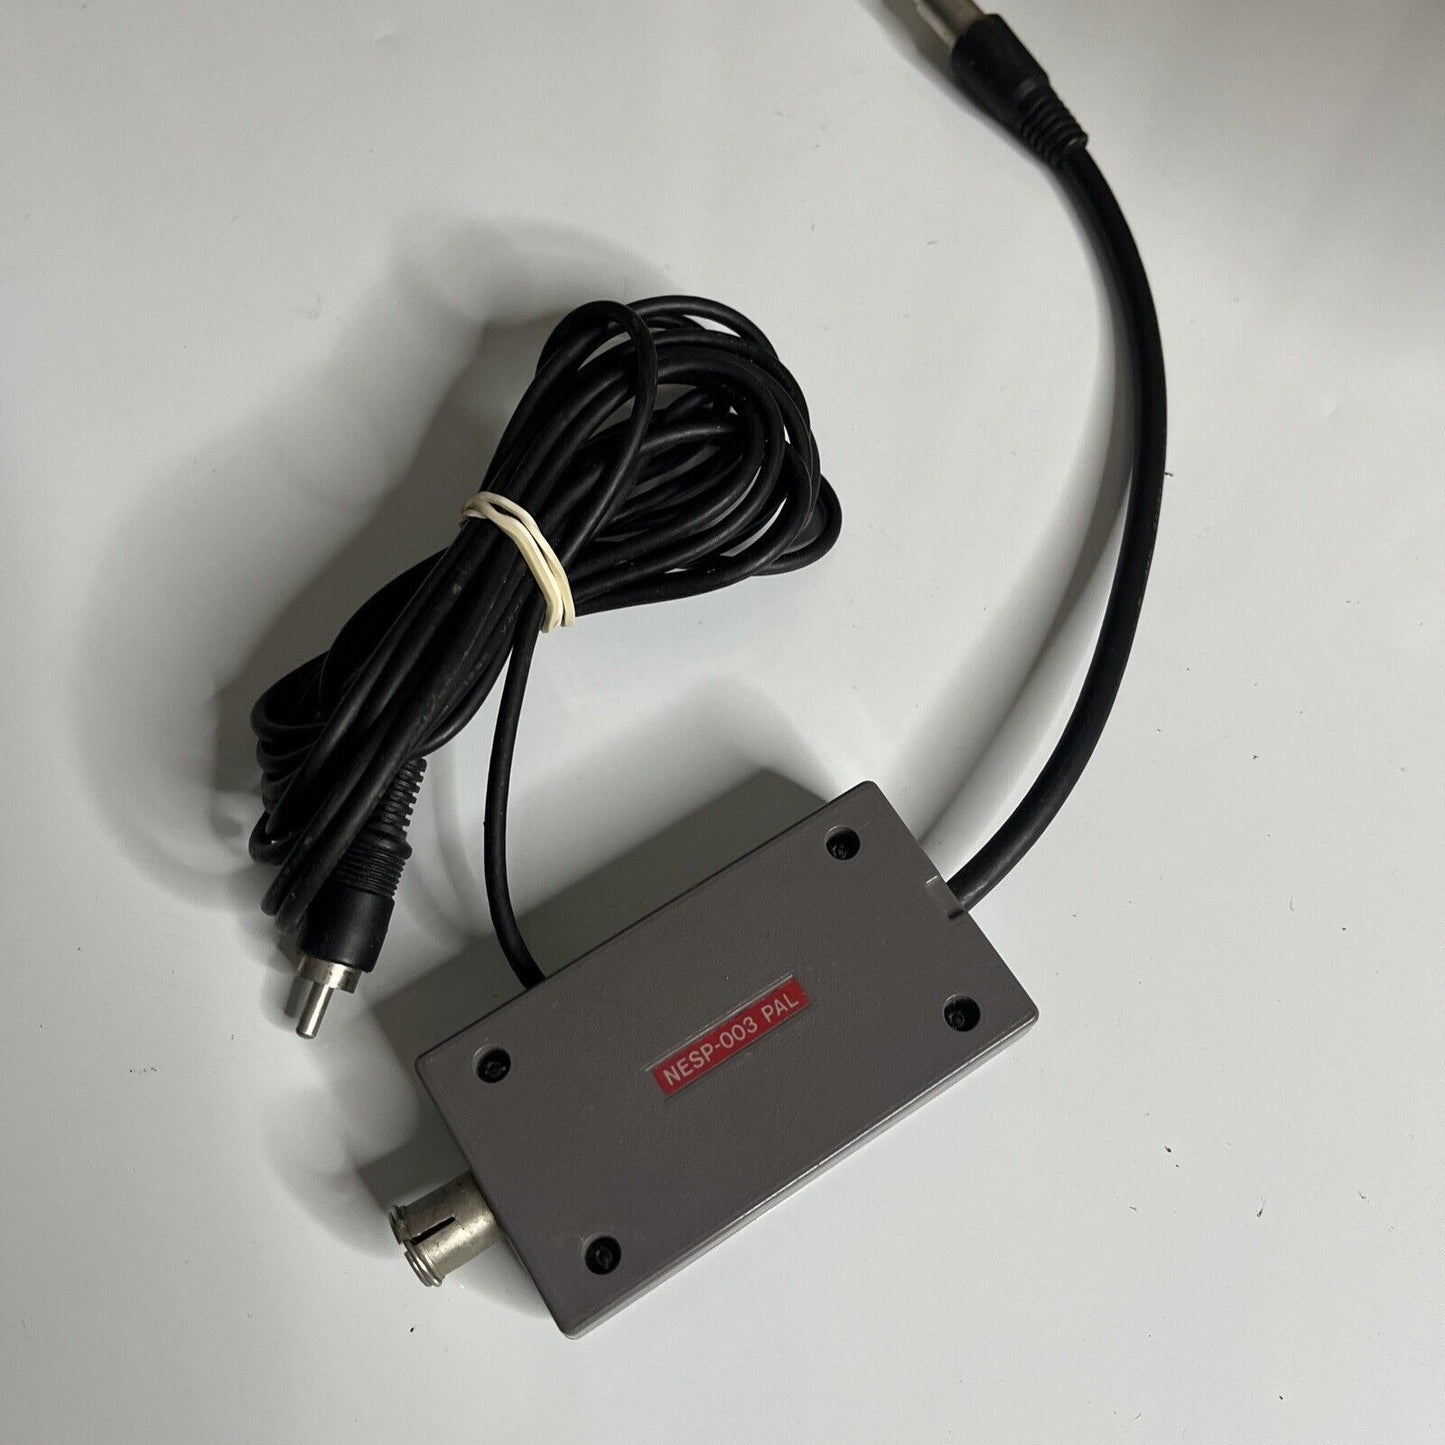 Genuine Nintendo NES RF Switch NESP-003 PAL